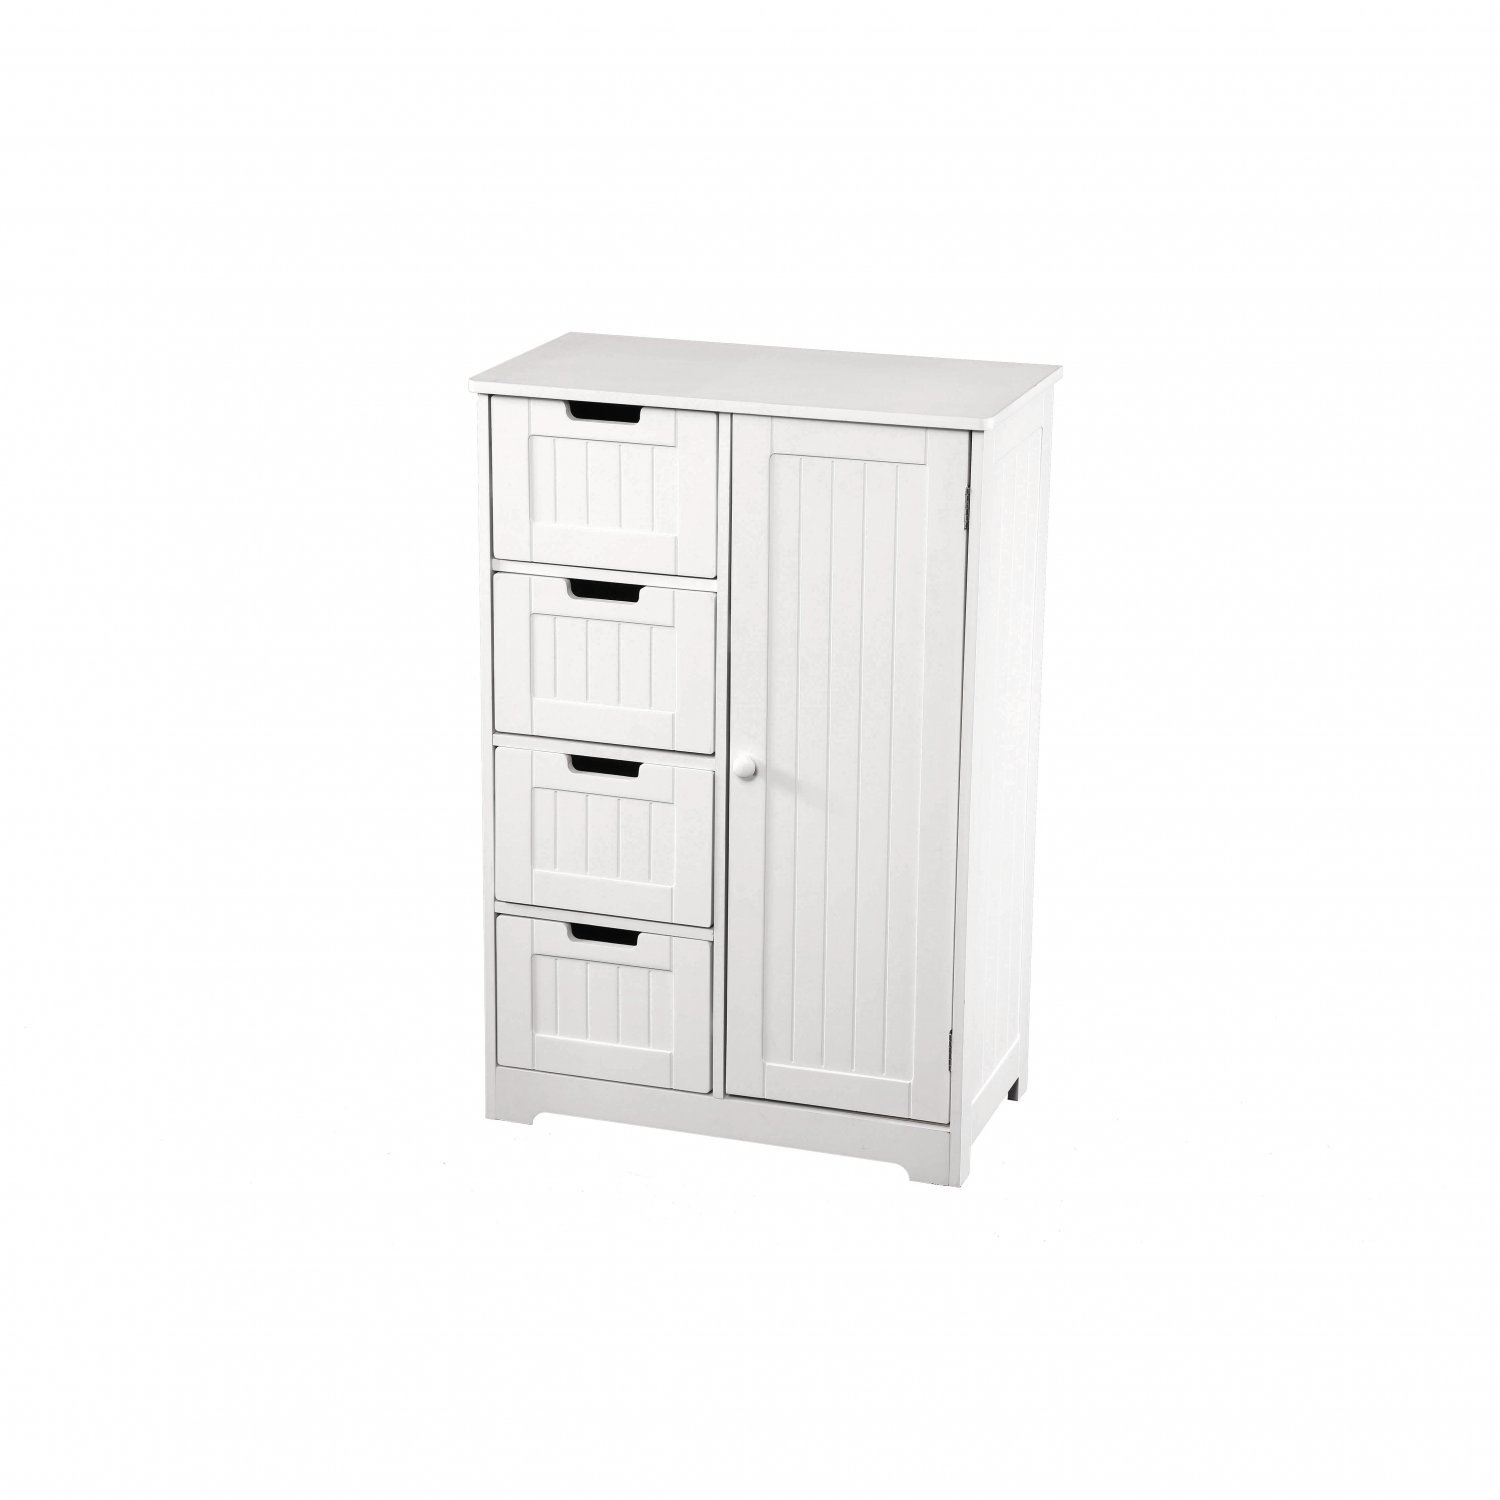 White Hallway Bathroom Unit Cupboard Shelf Storage Free Standing with Drawers